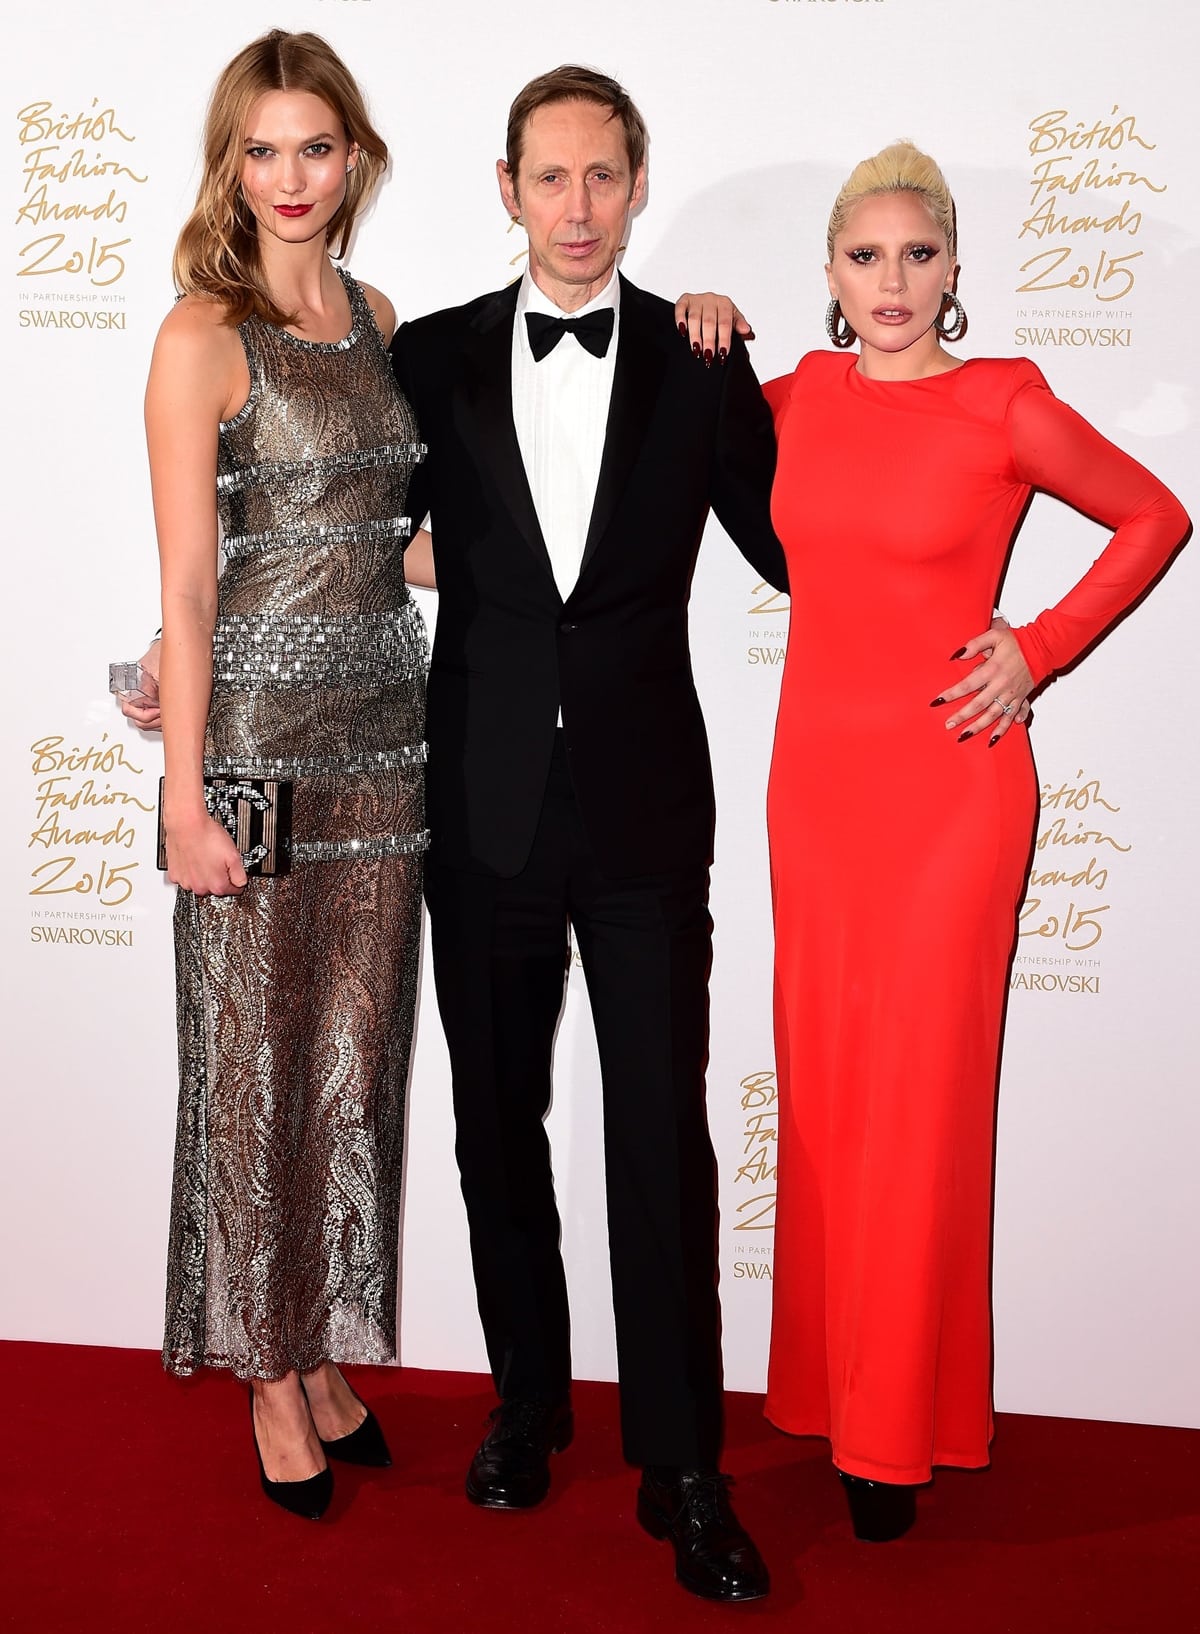 Karlie Kloss shows she's much taller than Nick Knight and Lady Gaga at the British Fashion Awards 2015